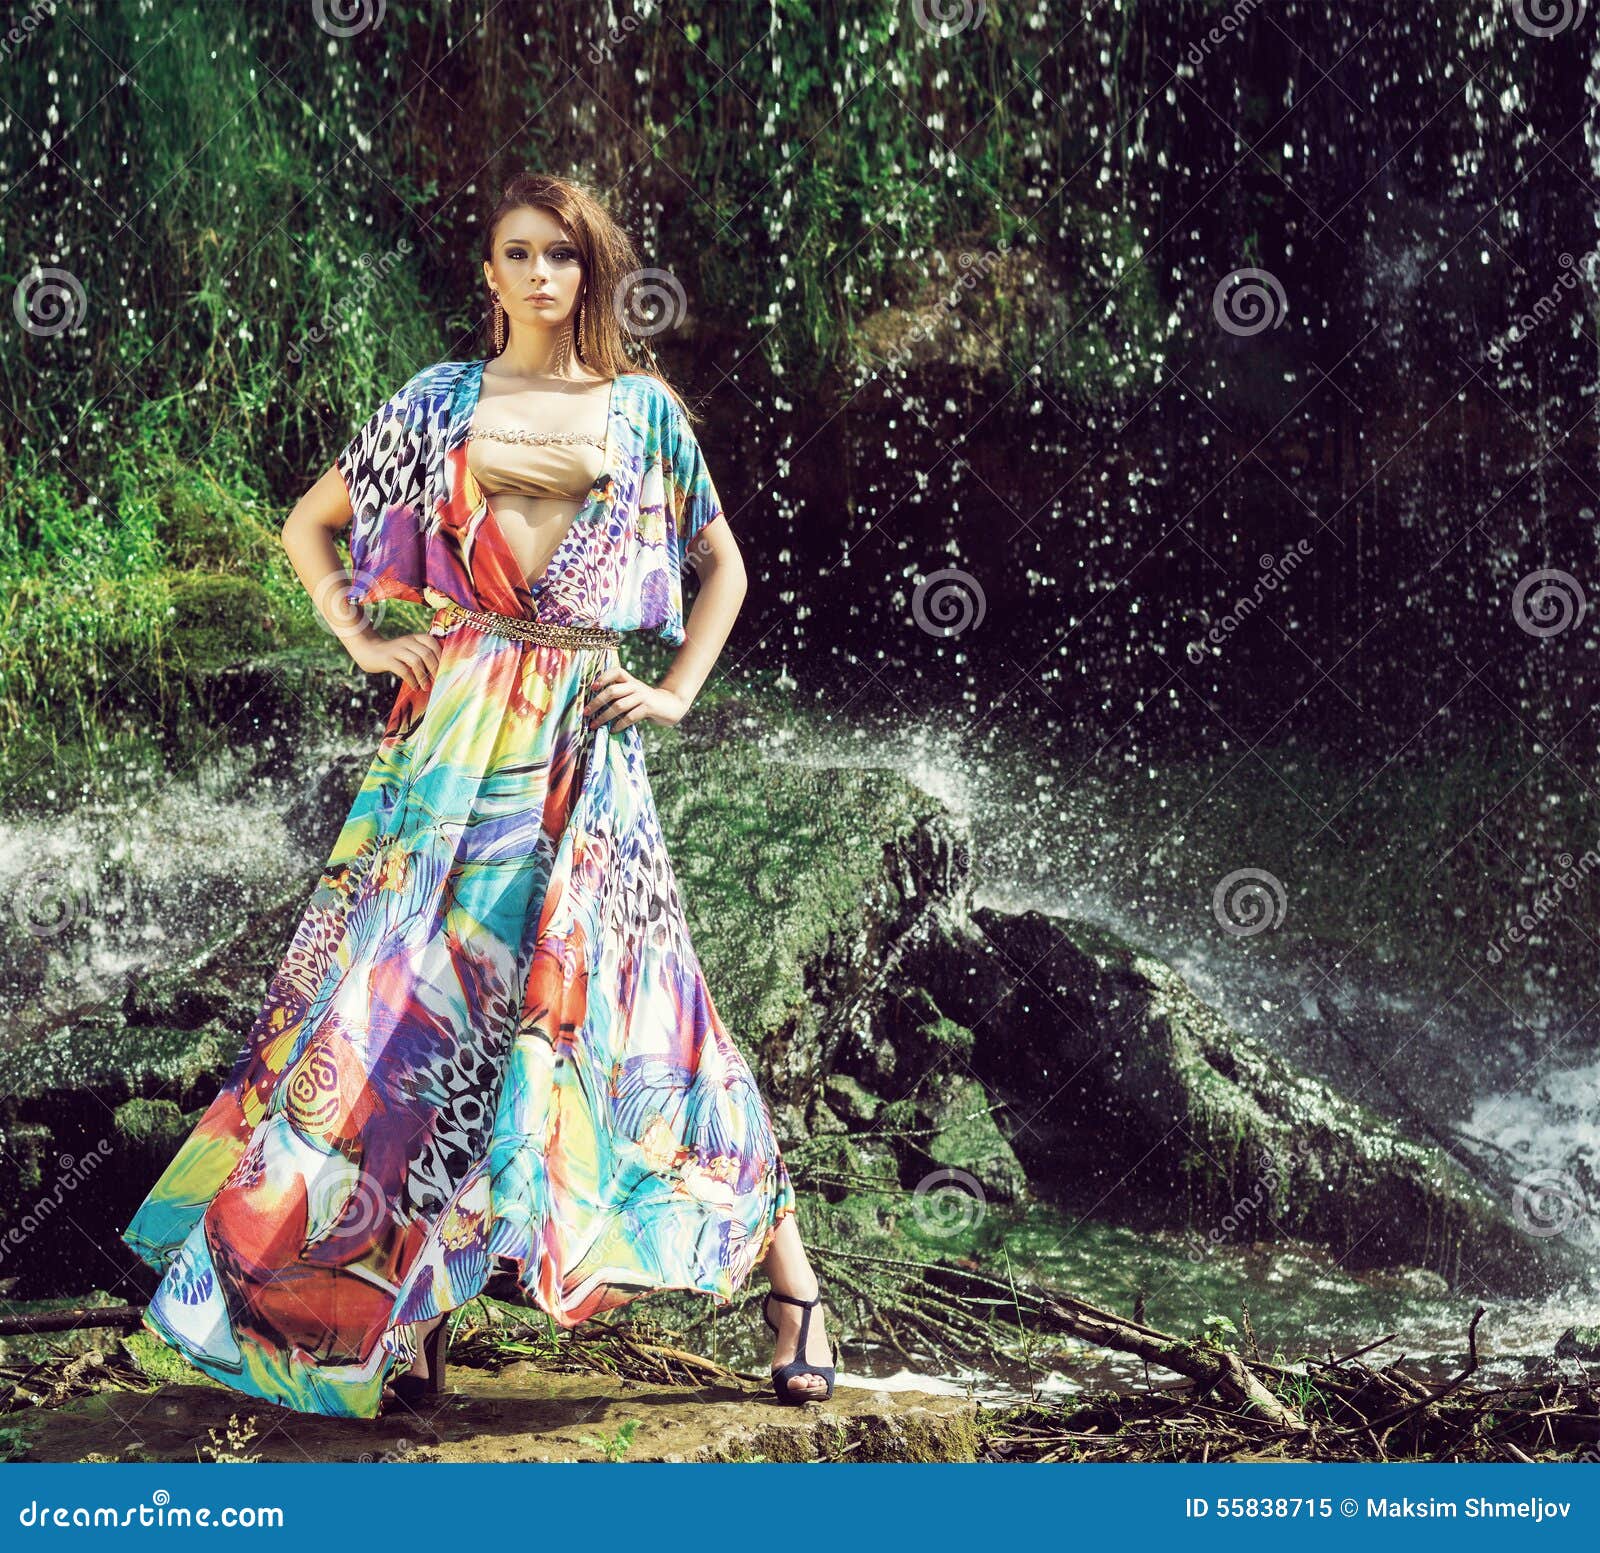 Young Woman in a Beautiful Fashion Dress Posing Outdoors Stock Image ...